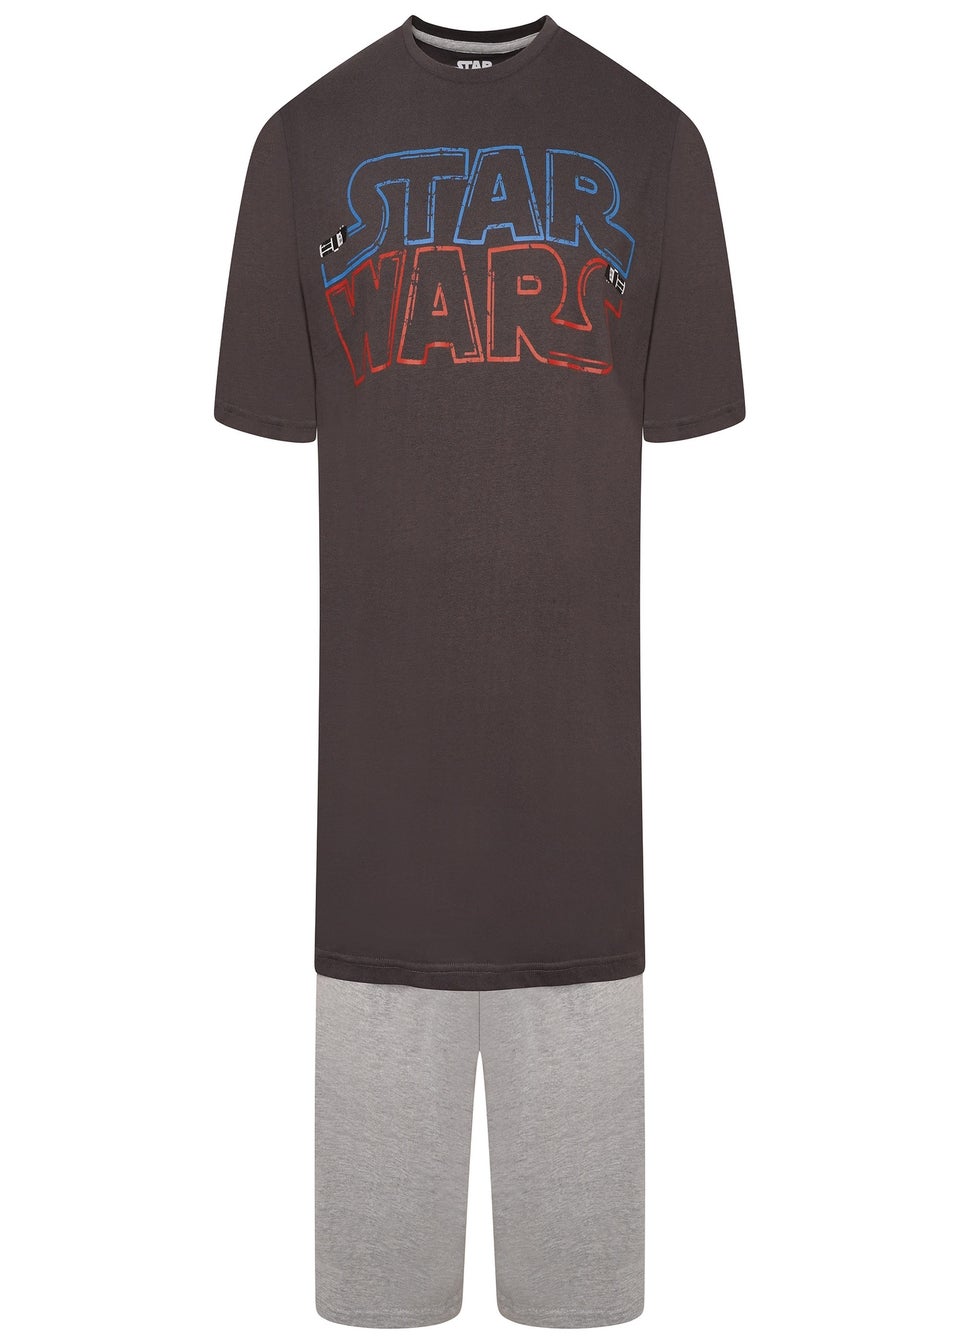 Star Wars Mens Grey Icon Pyjama